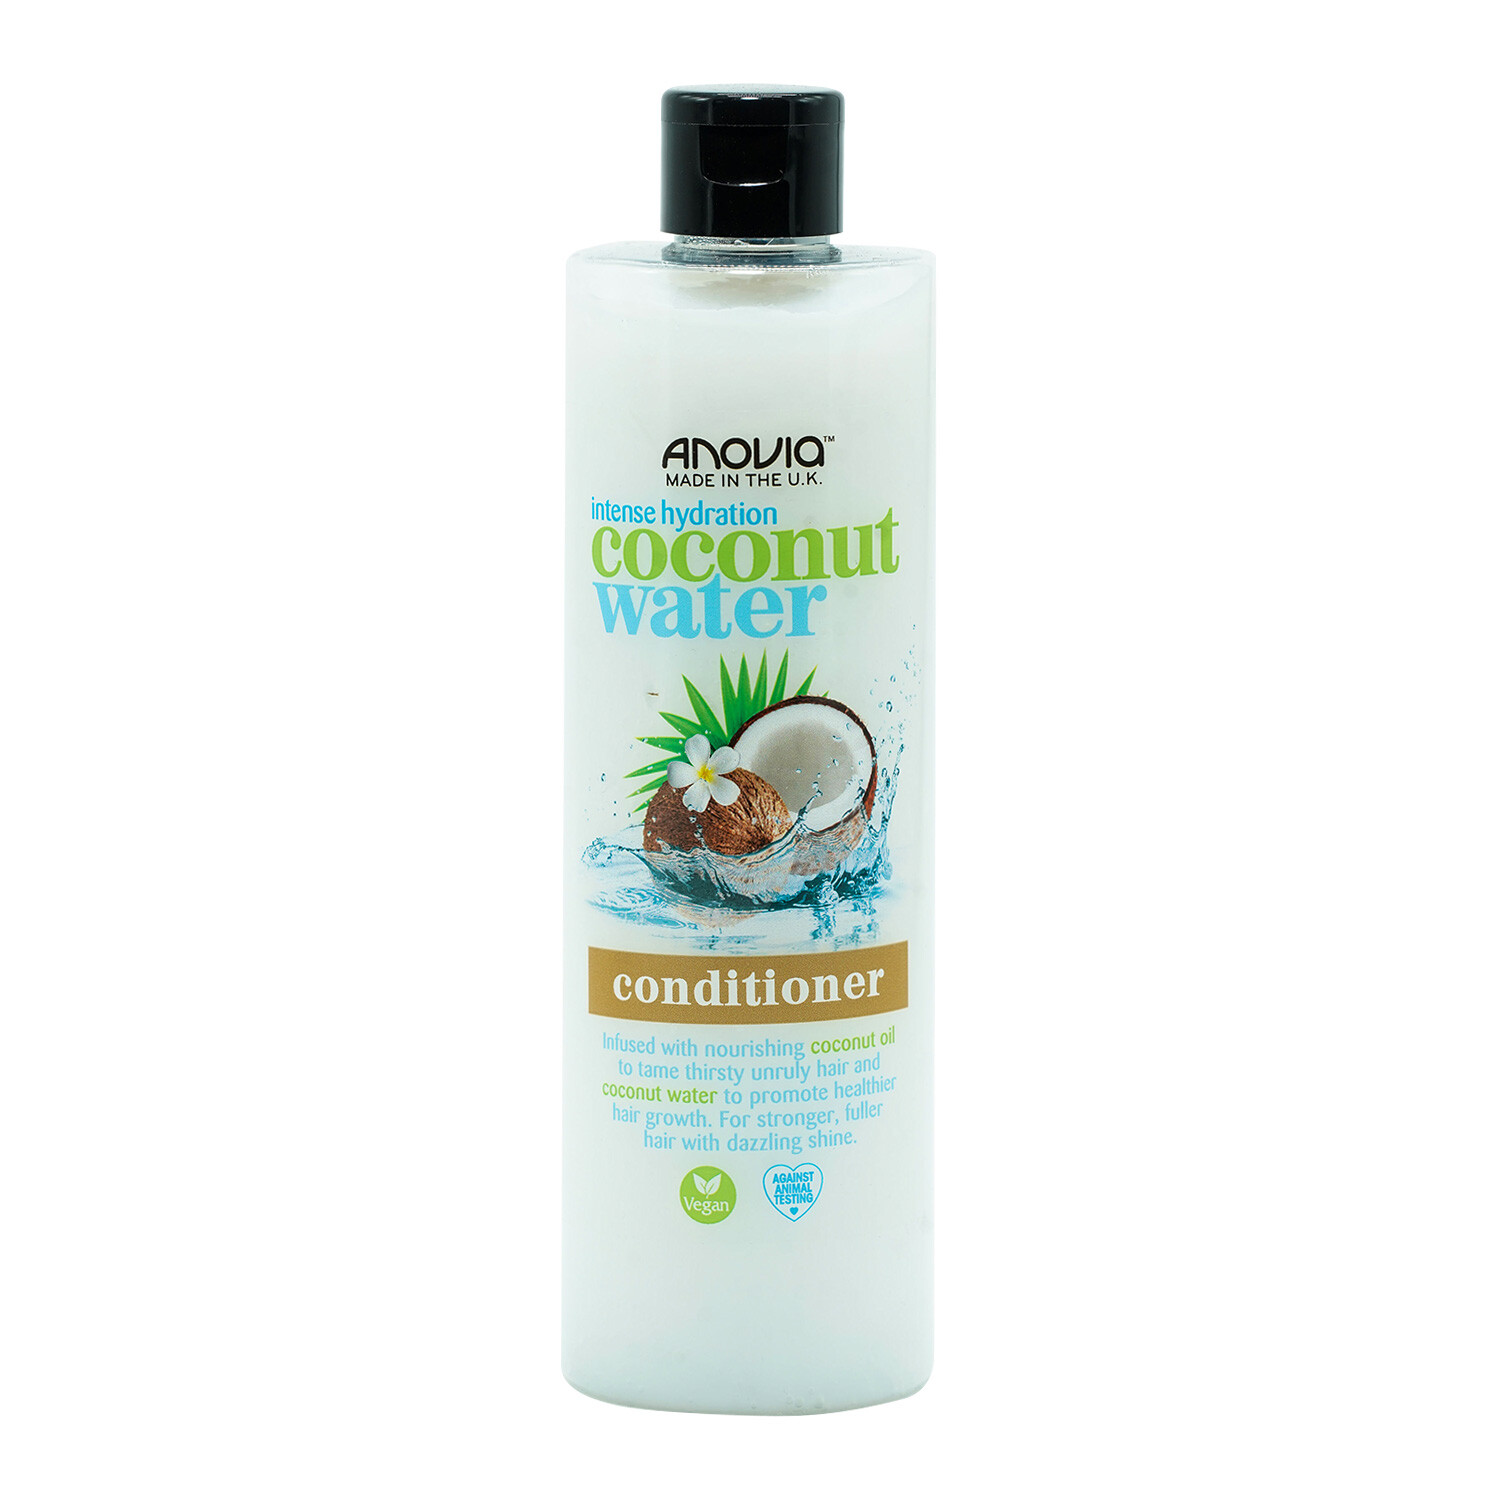 Anovia Intense Hydration Coconut Water Conditioner - White Image